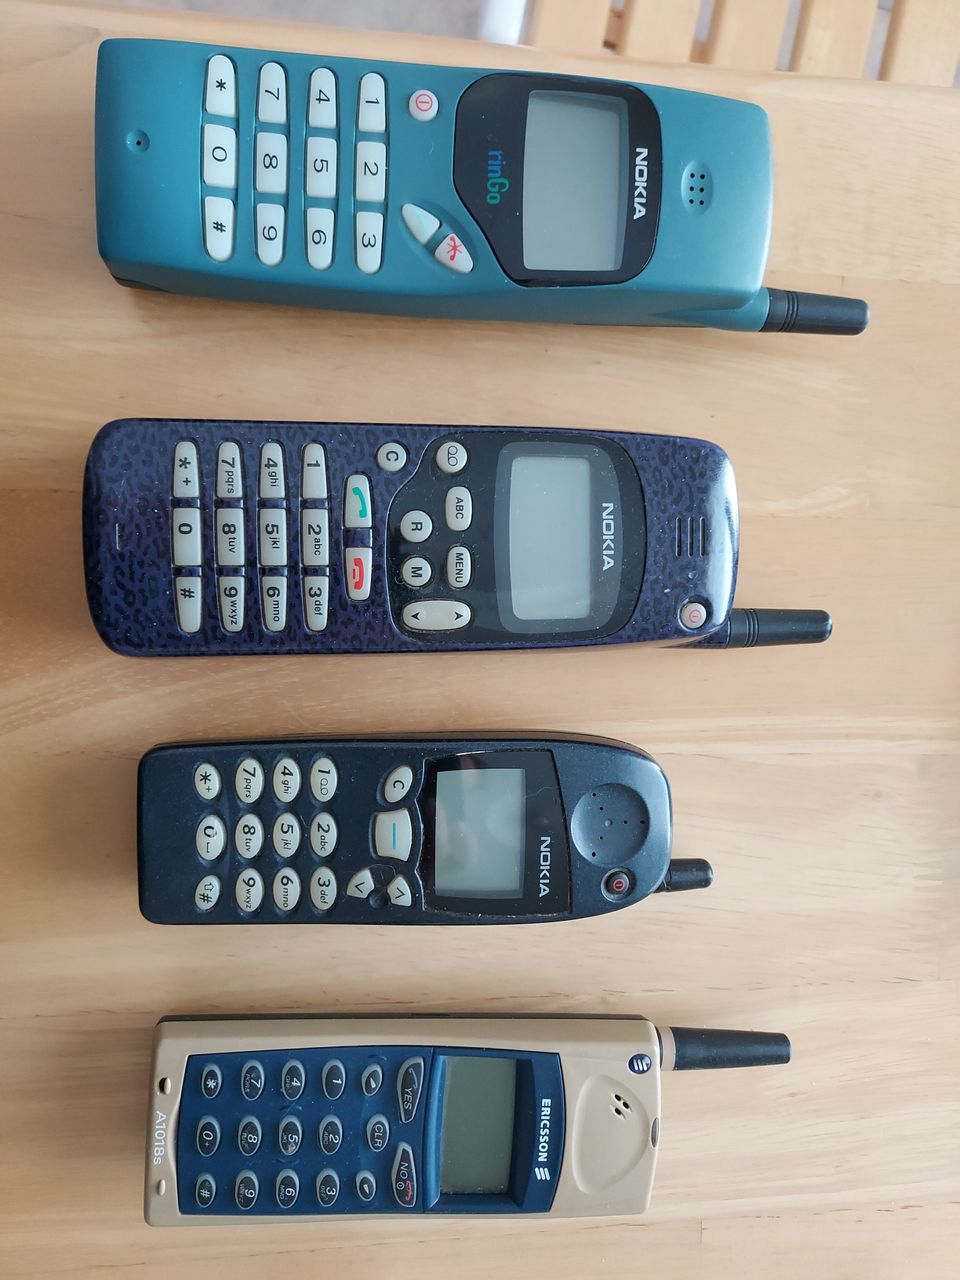 Vanhoja matkapuhelimia